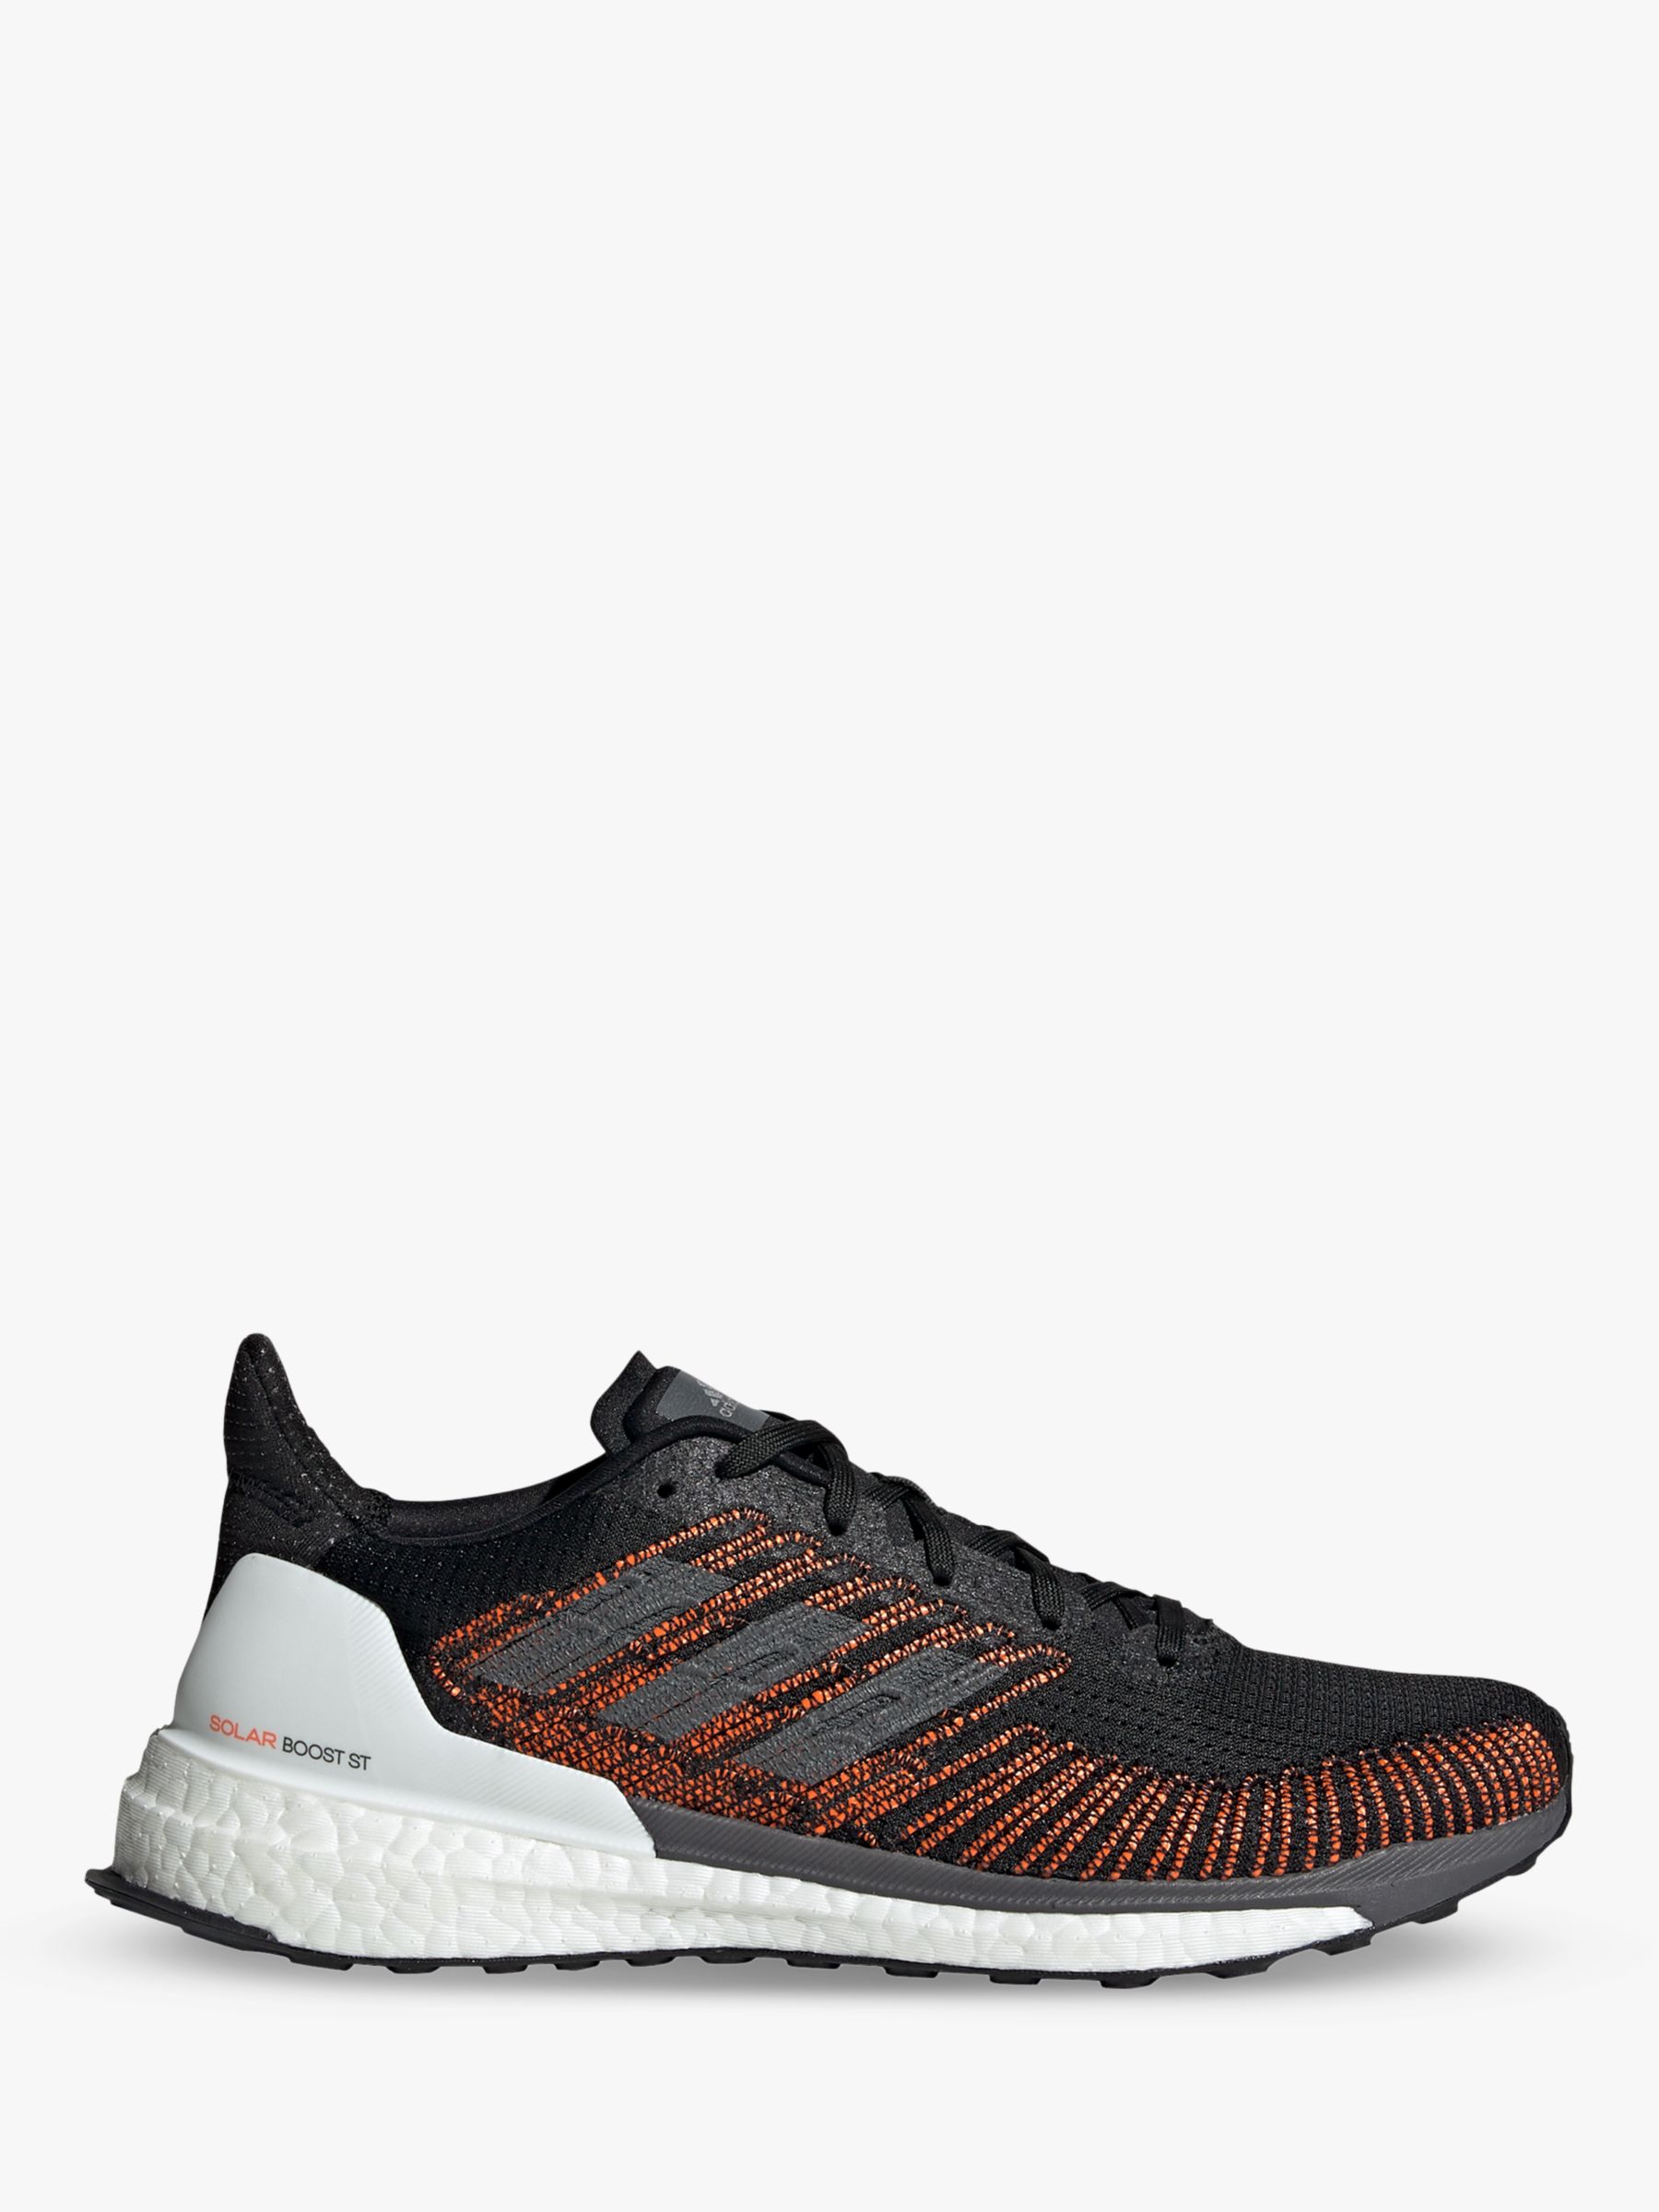 adidas Solar Boost 19 ST Men's Running Shoes, Core Black/Grey Five 